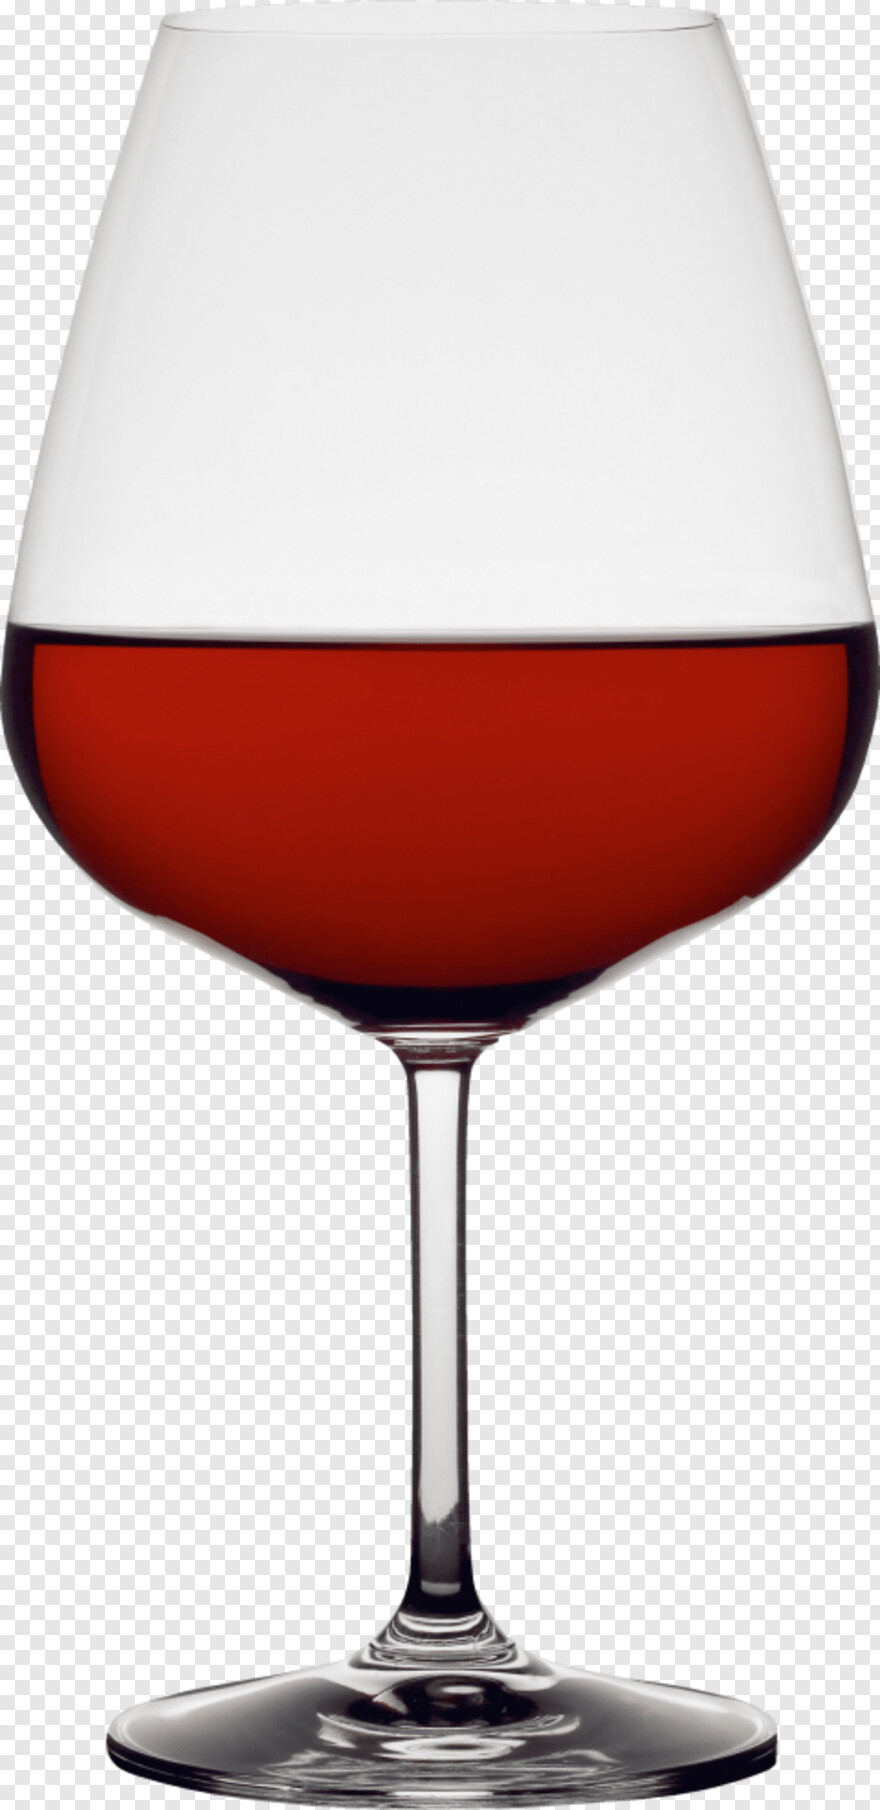 wine-glass-icon # 795111